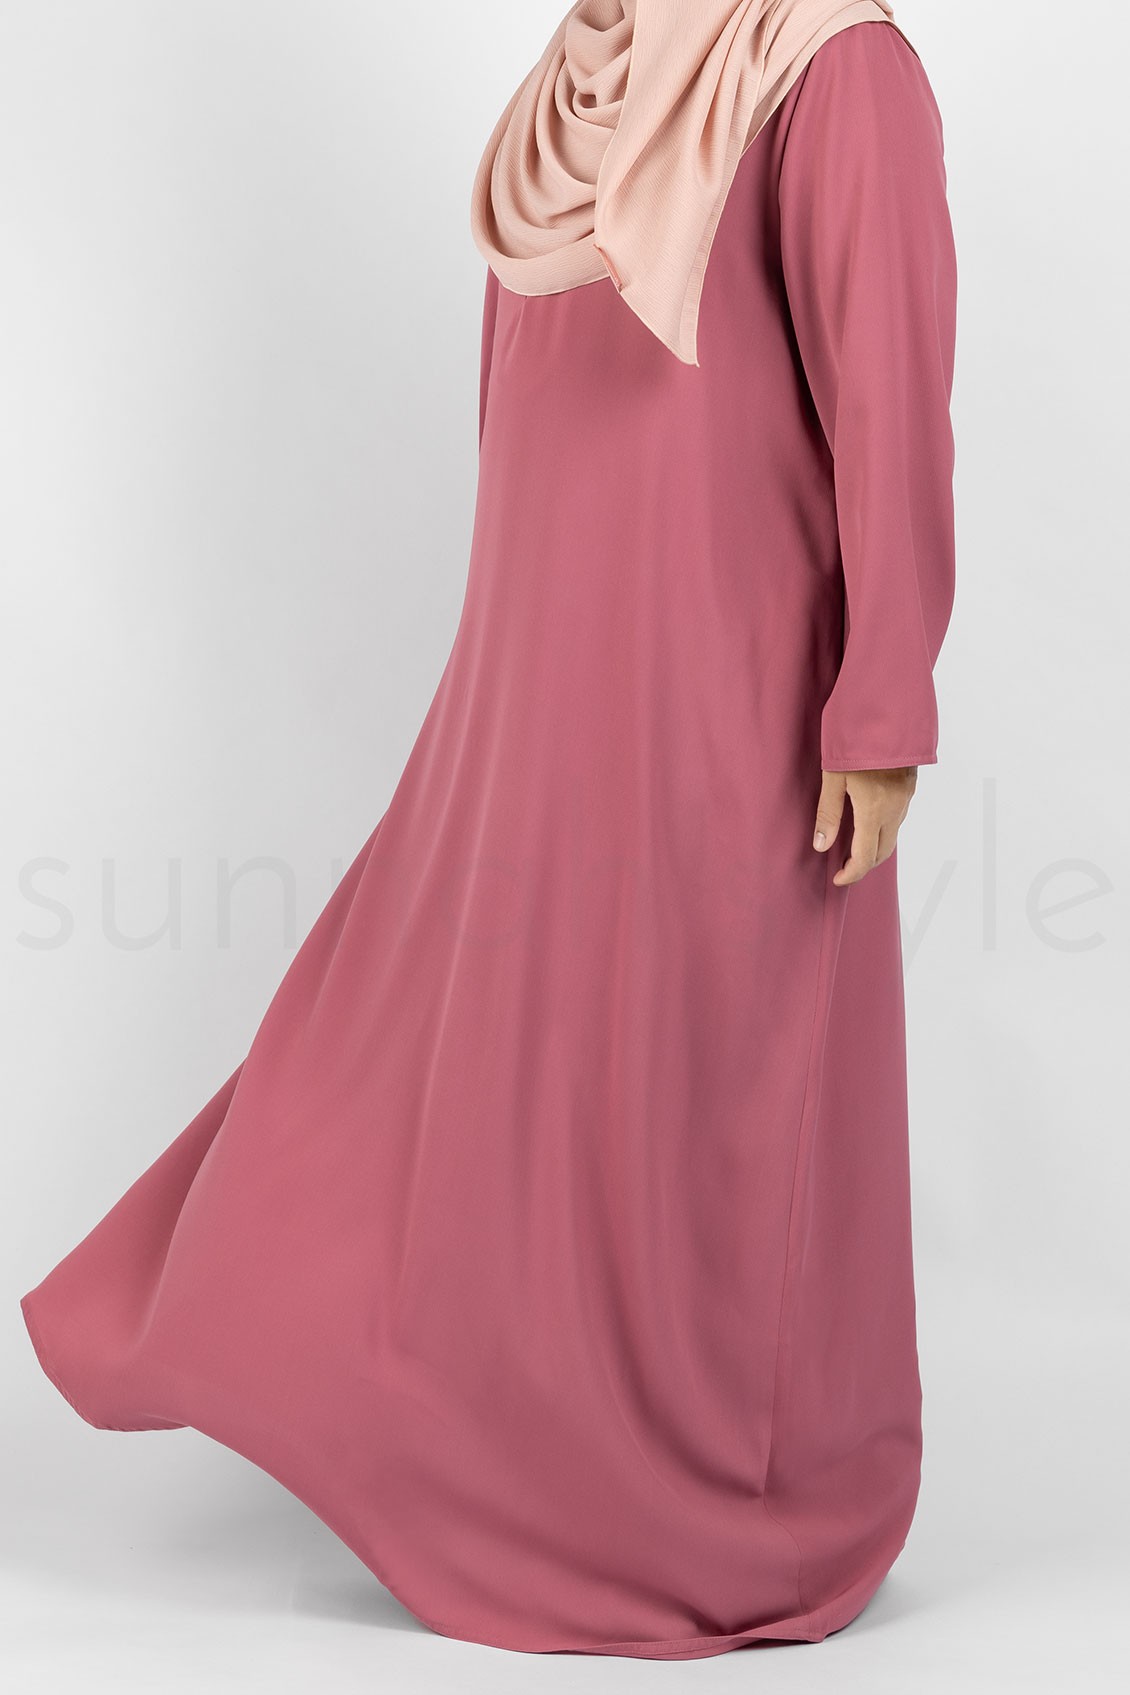 Sunnah Style Essentials Closed Abaya Desert Rose